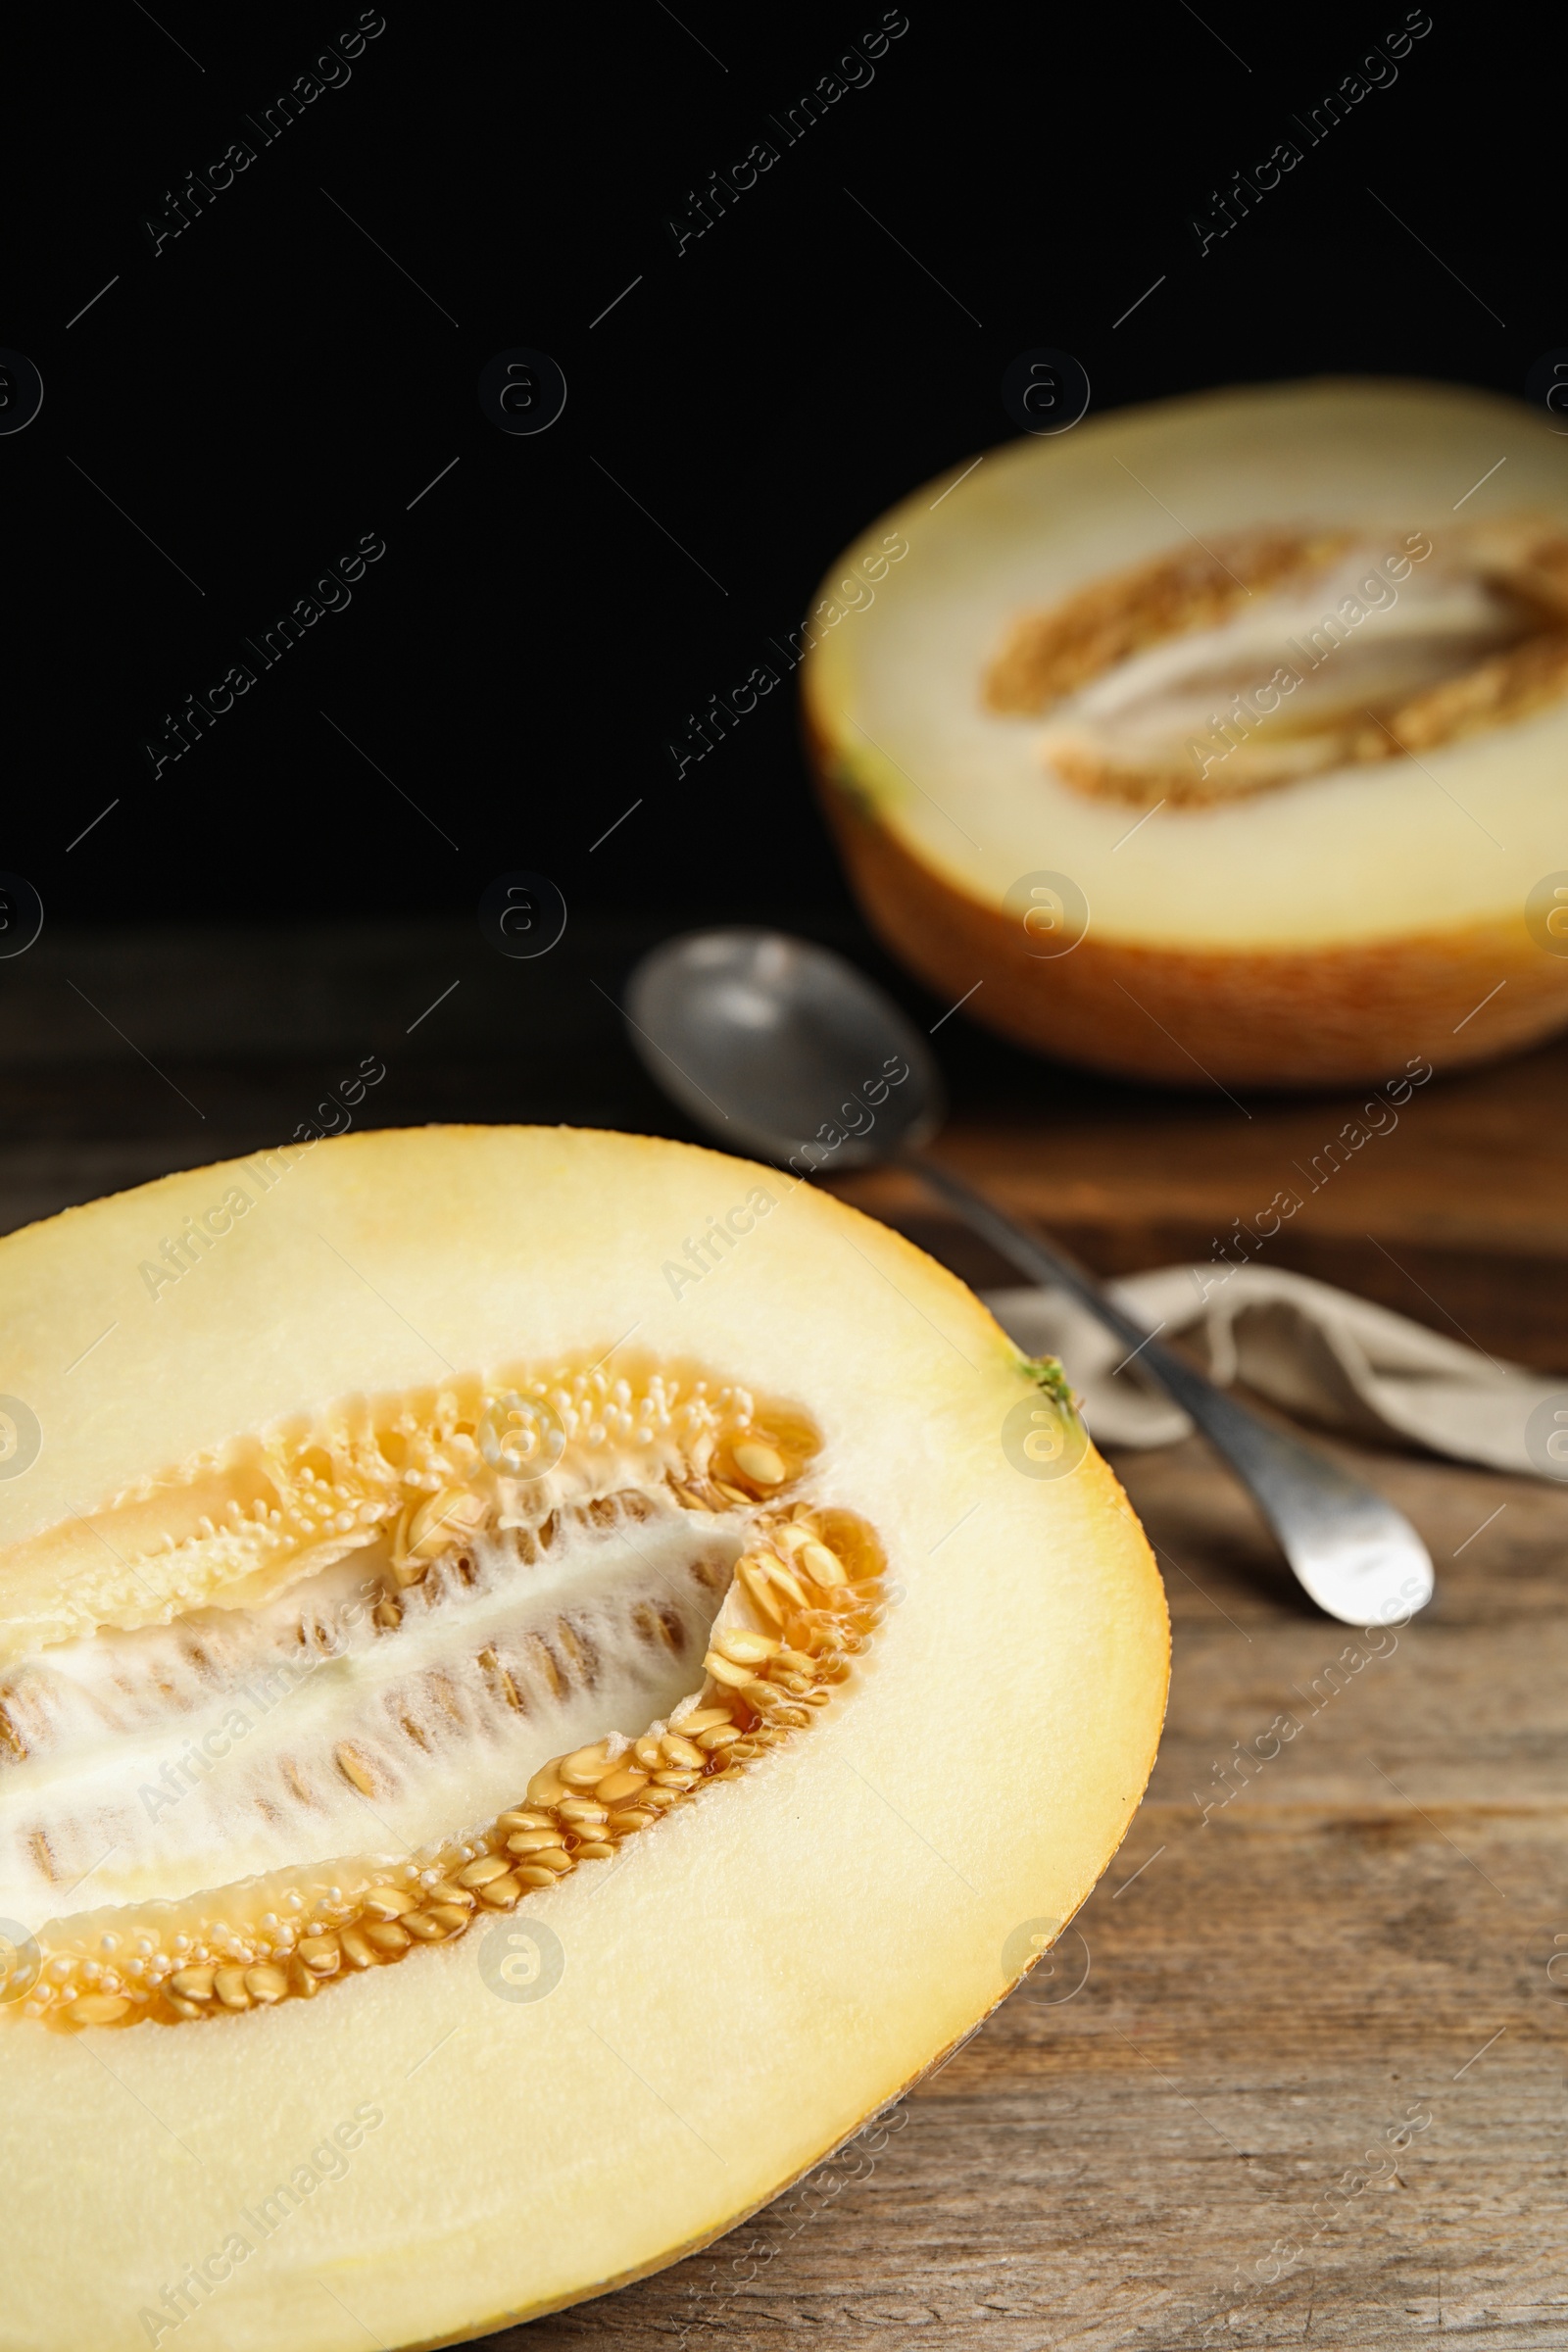 Photo of Half of tasty ripe melon on wooden table, closeup